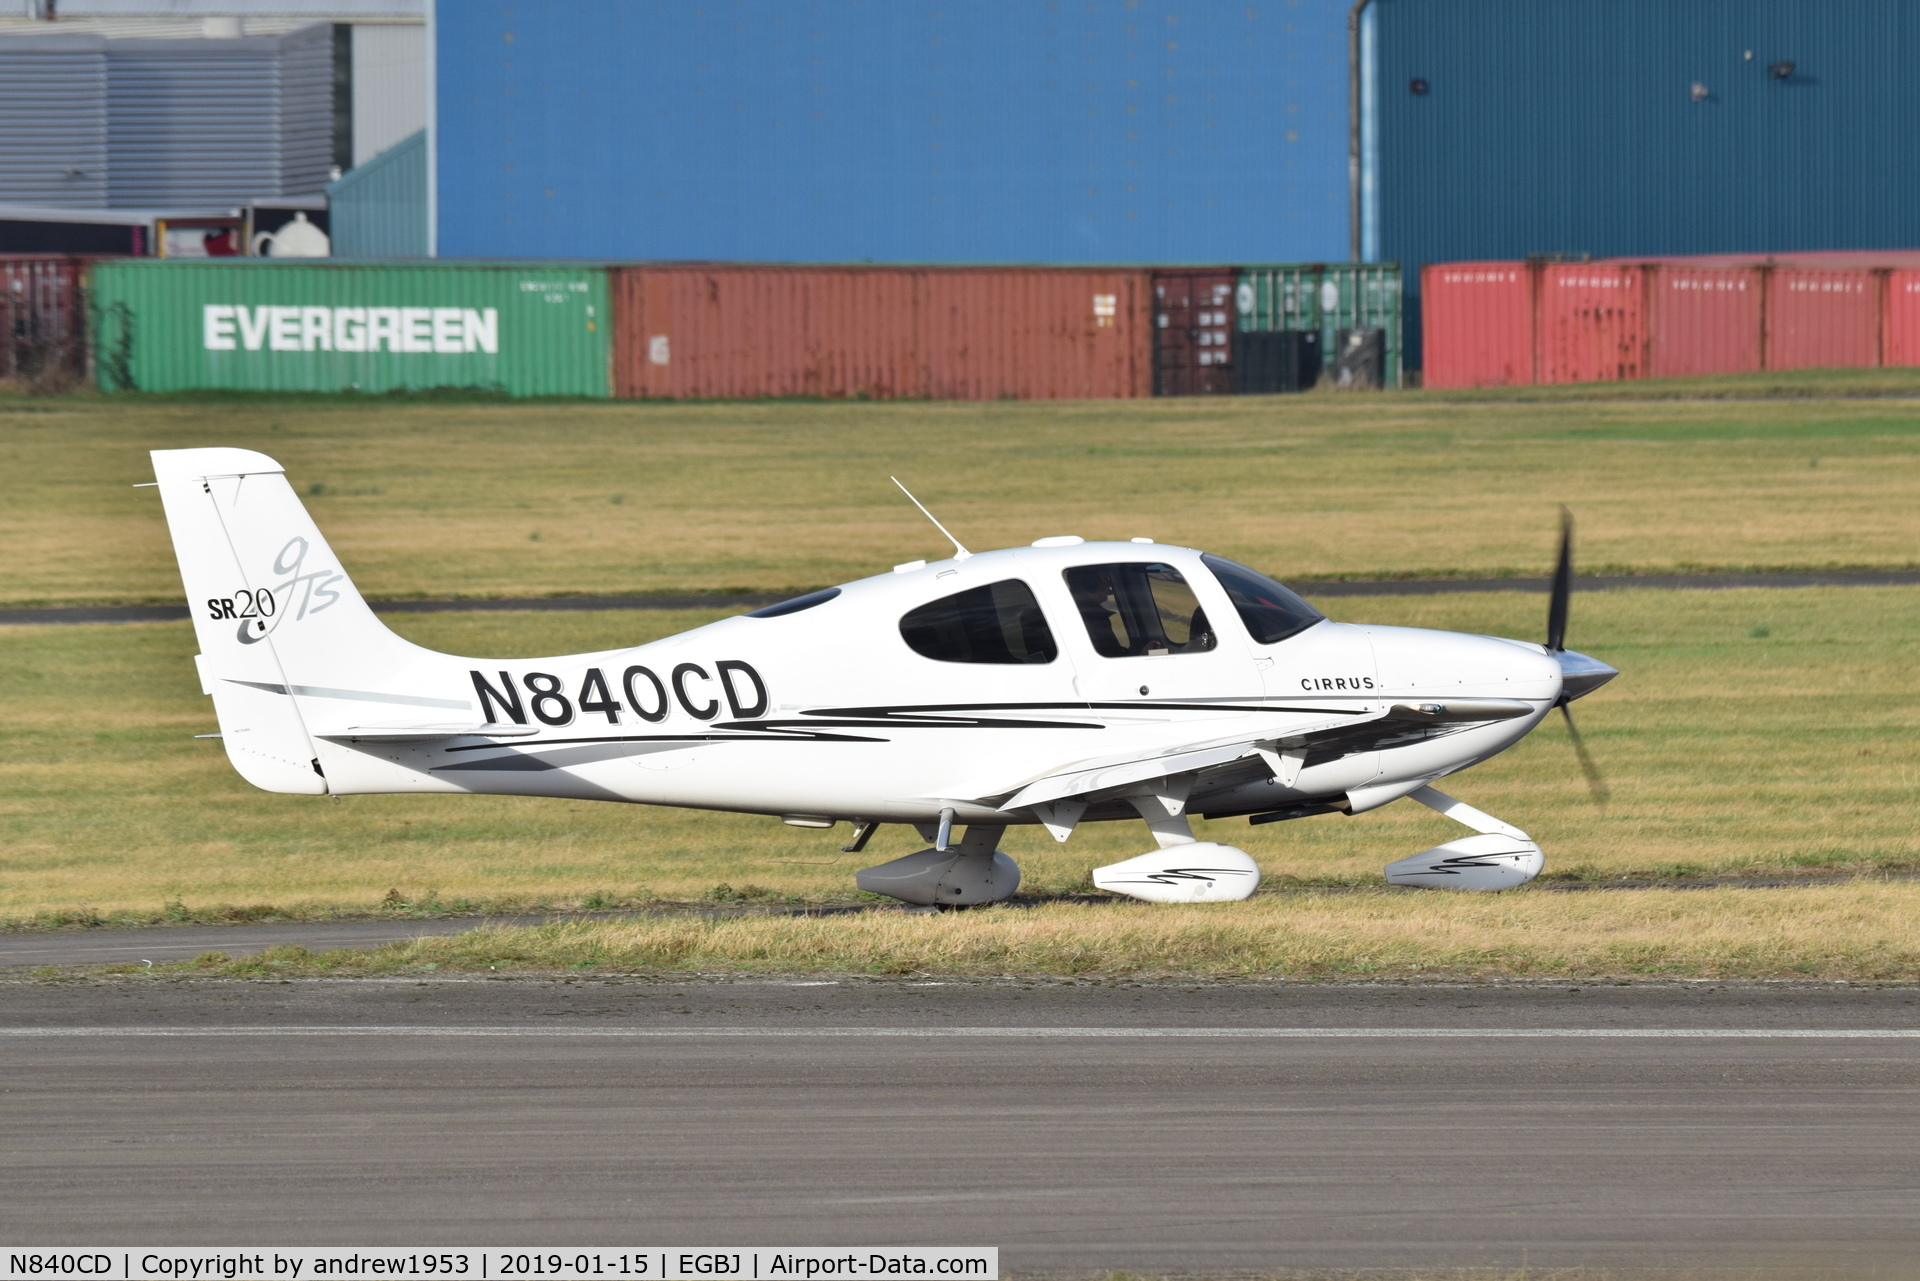 N840CD, 2005 Cirrus SR20 C/N 1535, N40CD at Gloucestershire Airport.